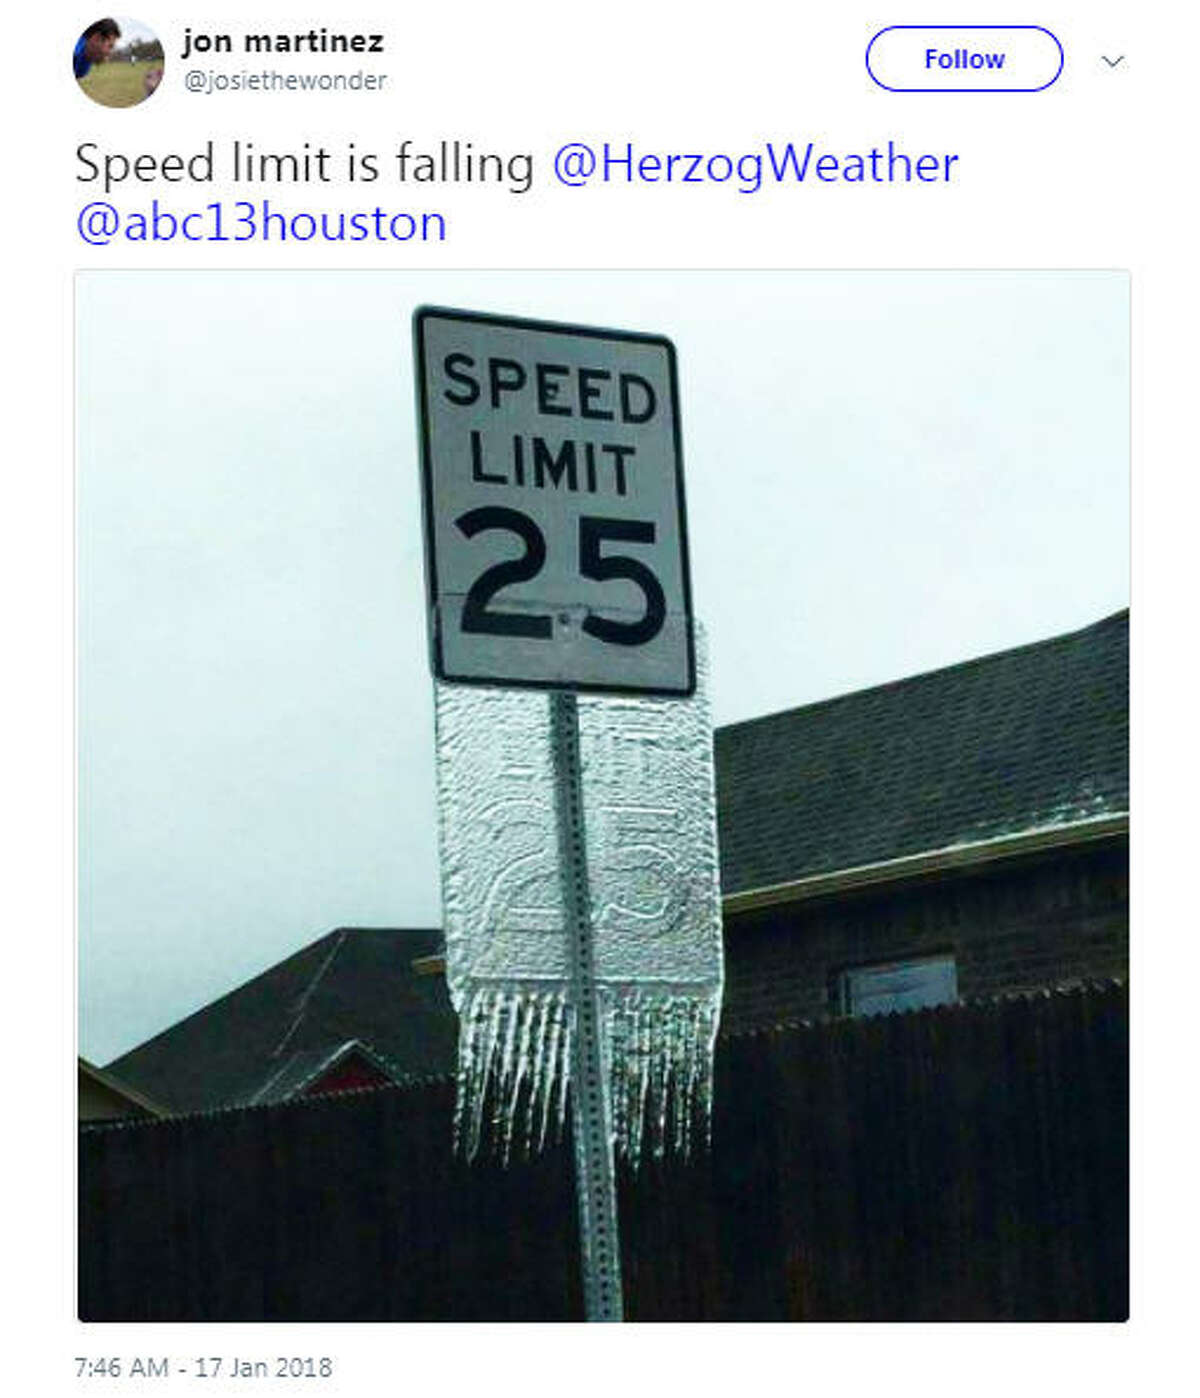 "Speed limit is falling" Source: Twitter